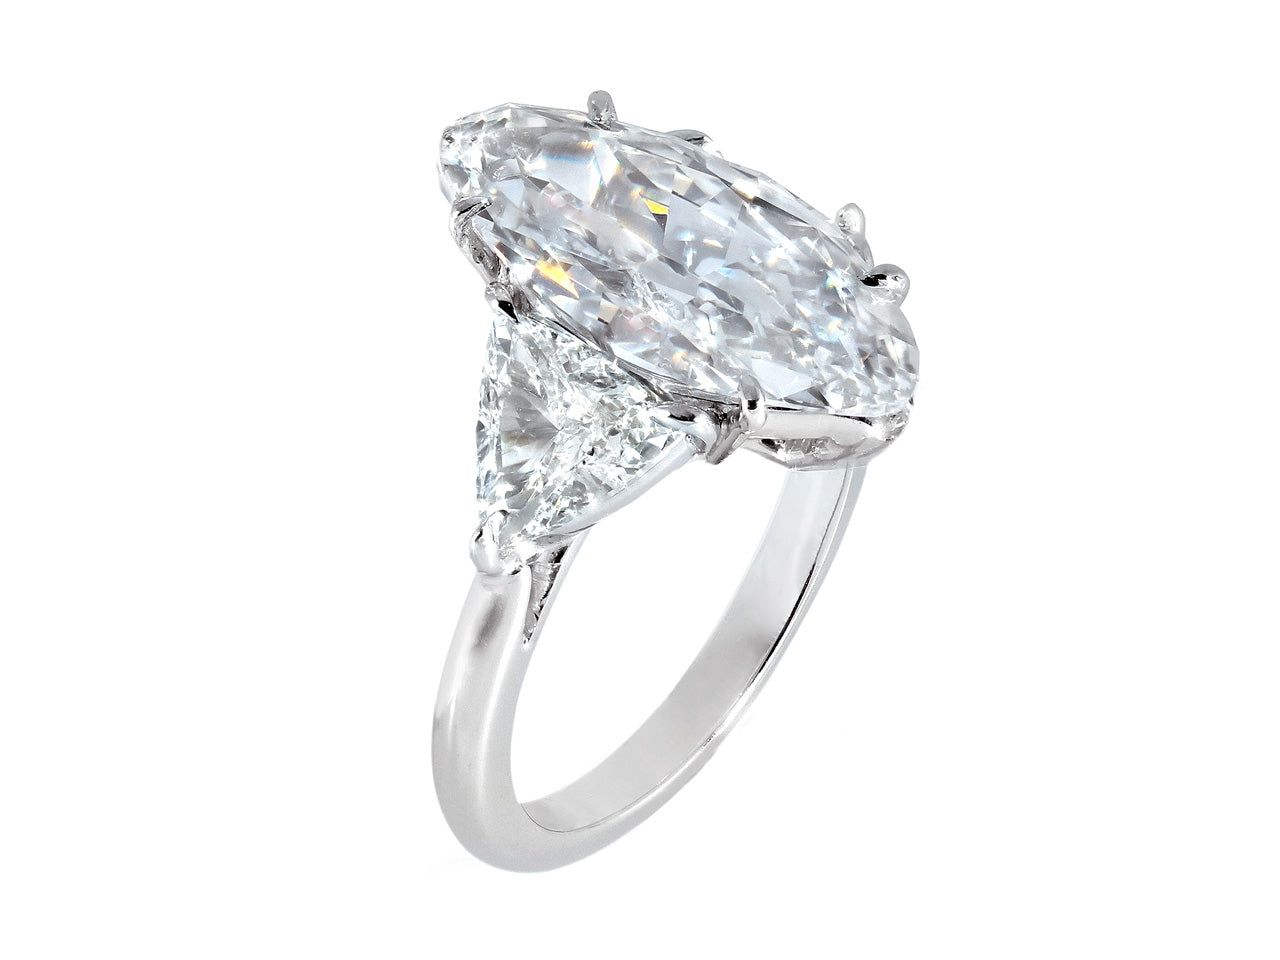 Marquise 'Moval' Diamond Ring in Platinum, 3.70 carat I/VS-1